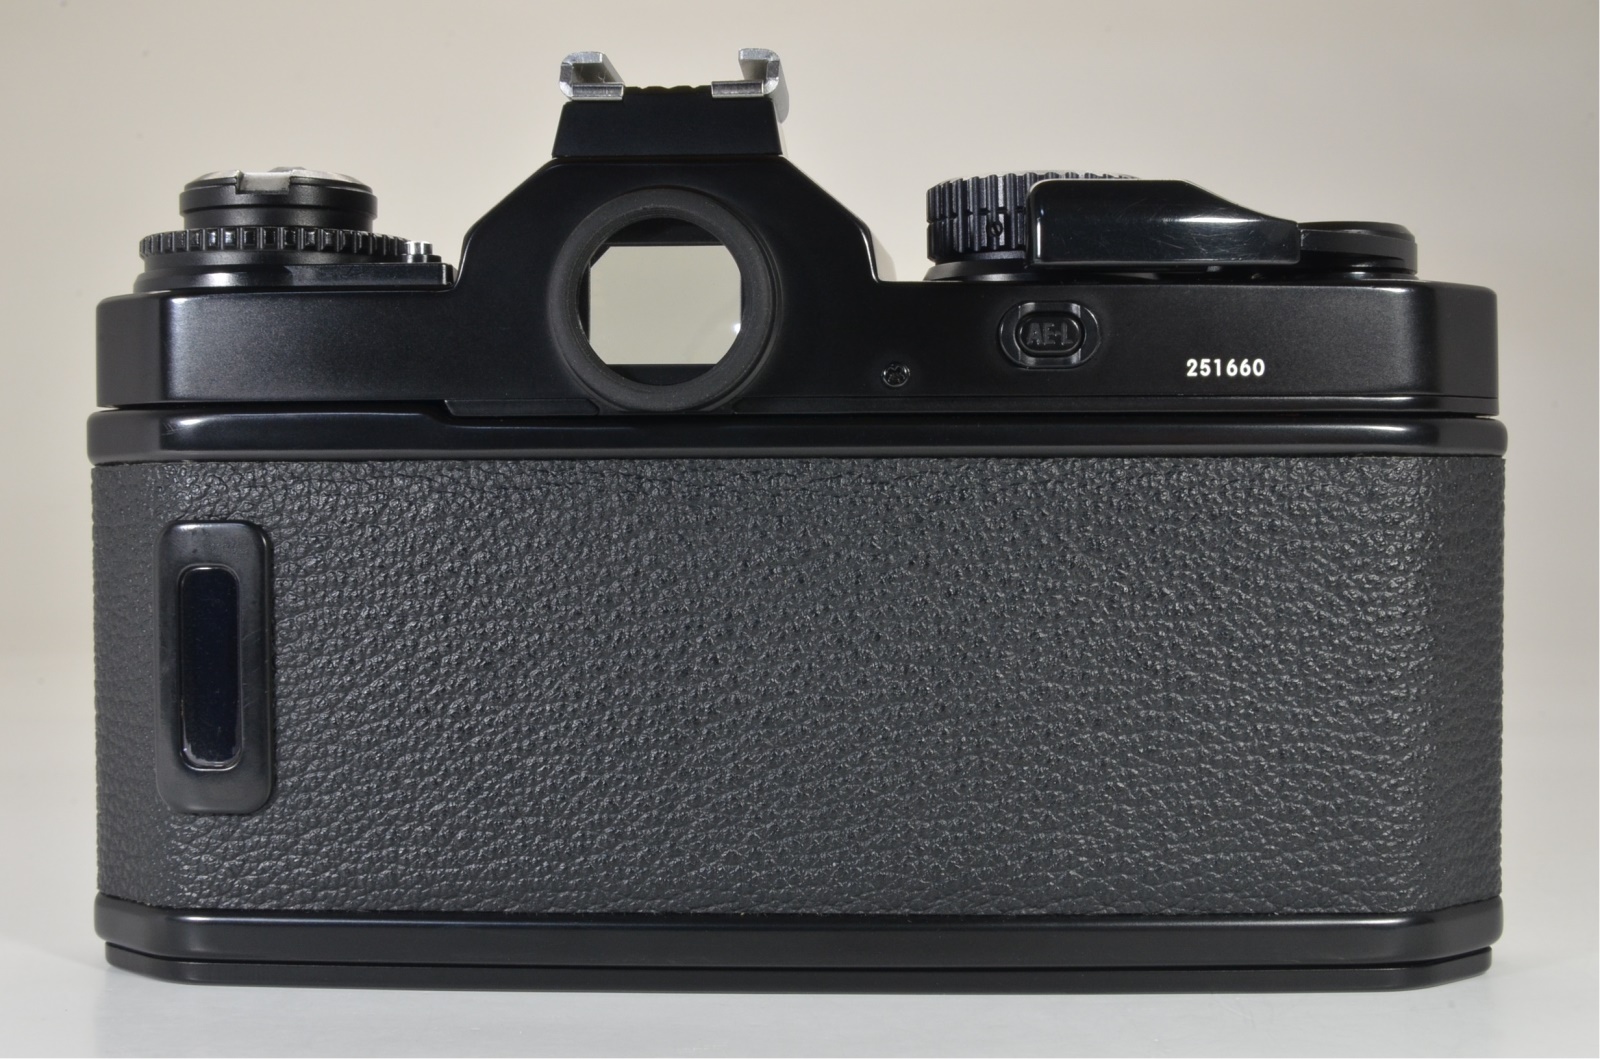 nikon fm3a 35mm film camera black with b3 focusing screen shooting tested